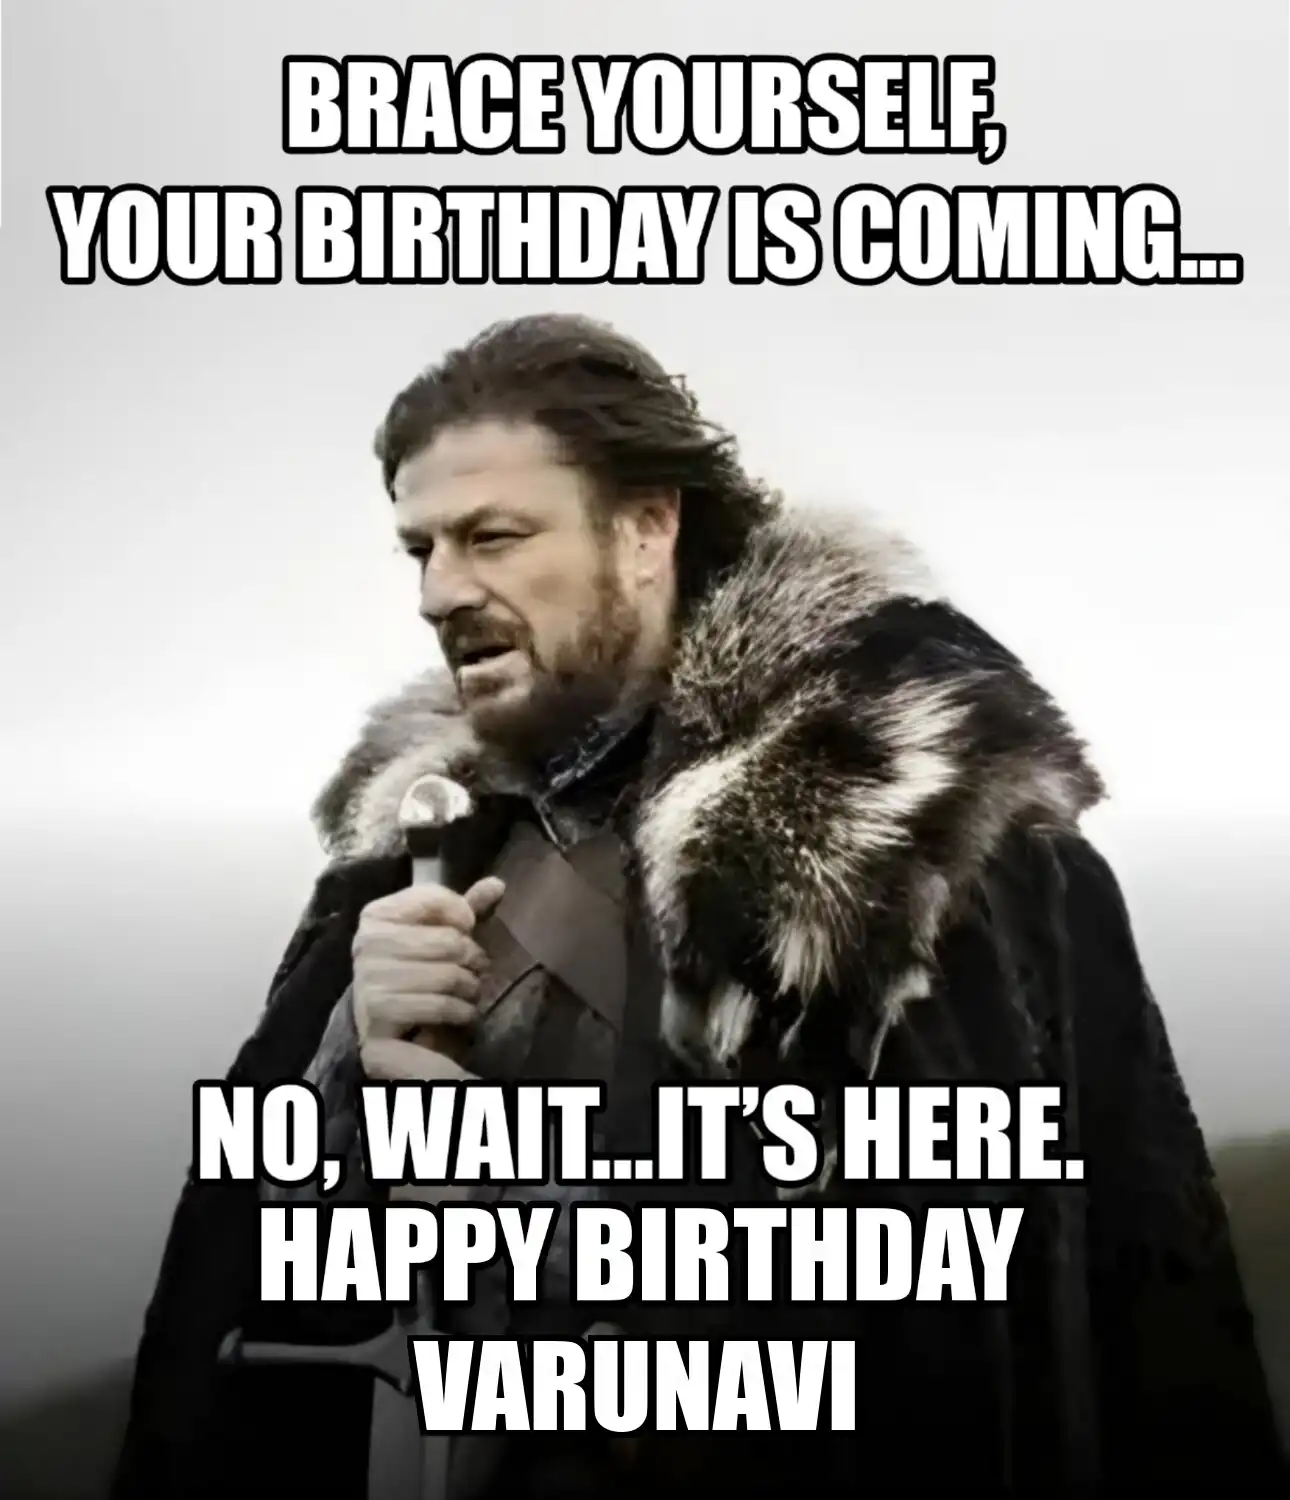 Happy Birthday Varunavi Brace Yourself Your Birthday Is Coming Meme